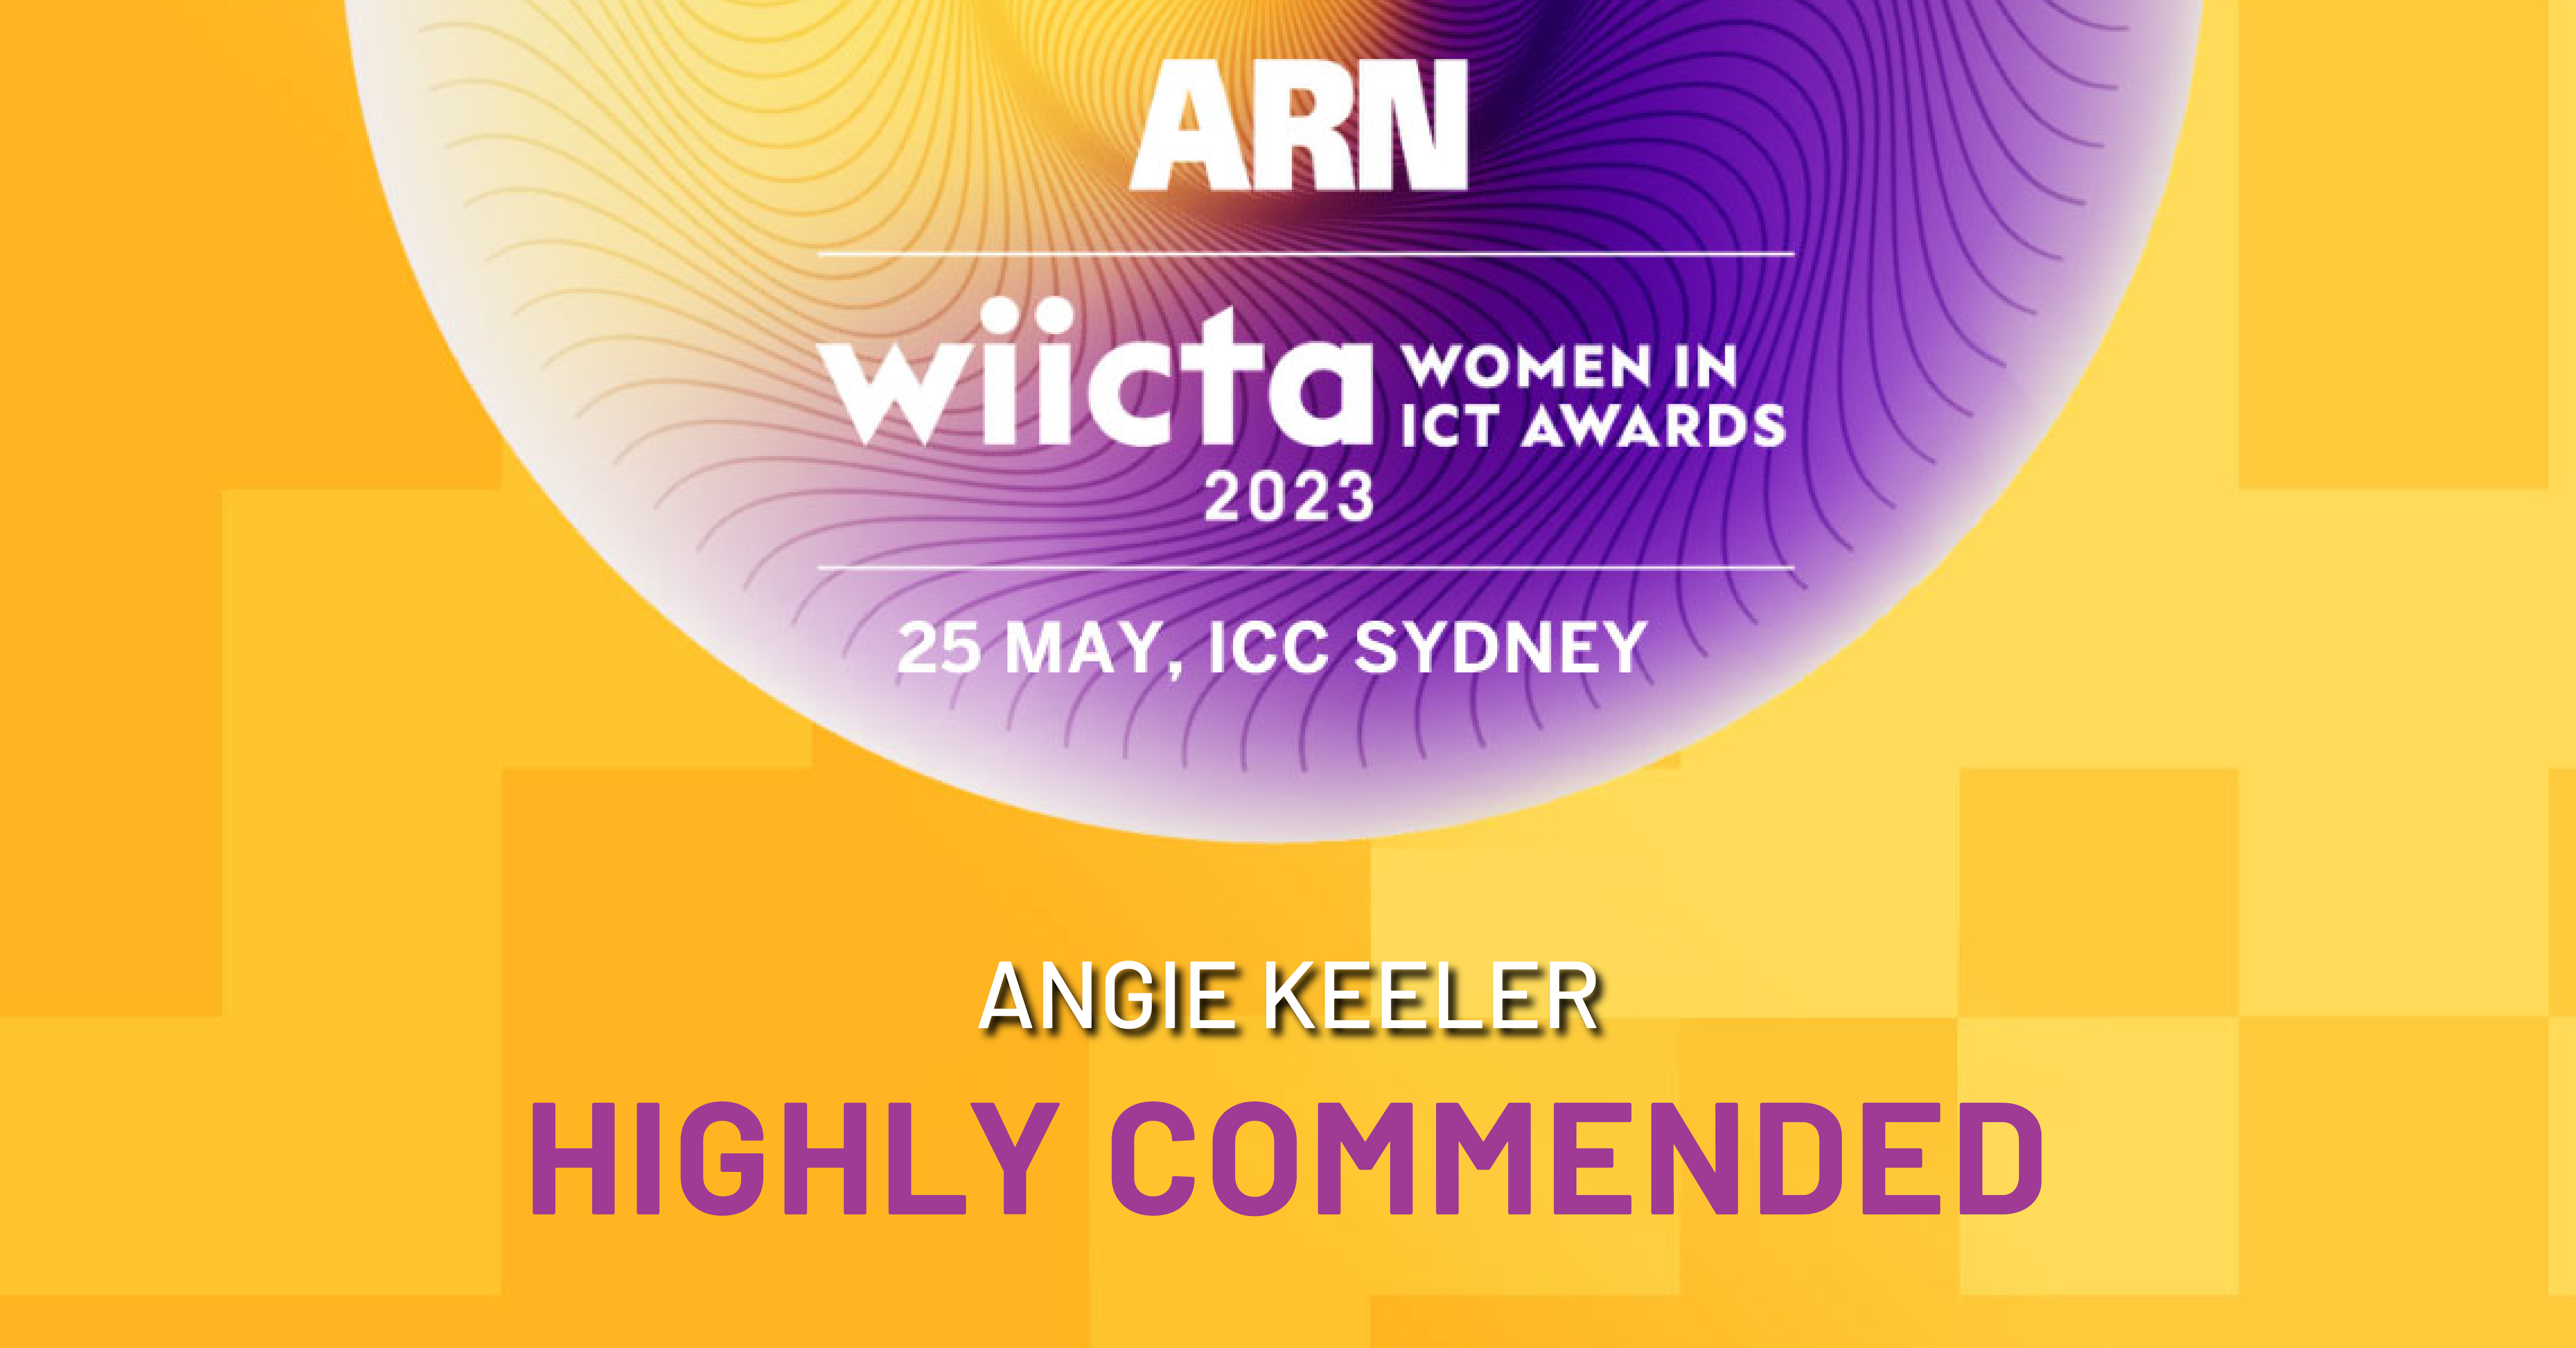 Awards_ARN Women in ICT Awards-2023